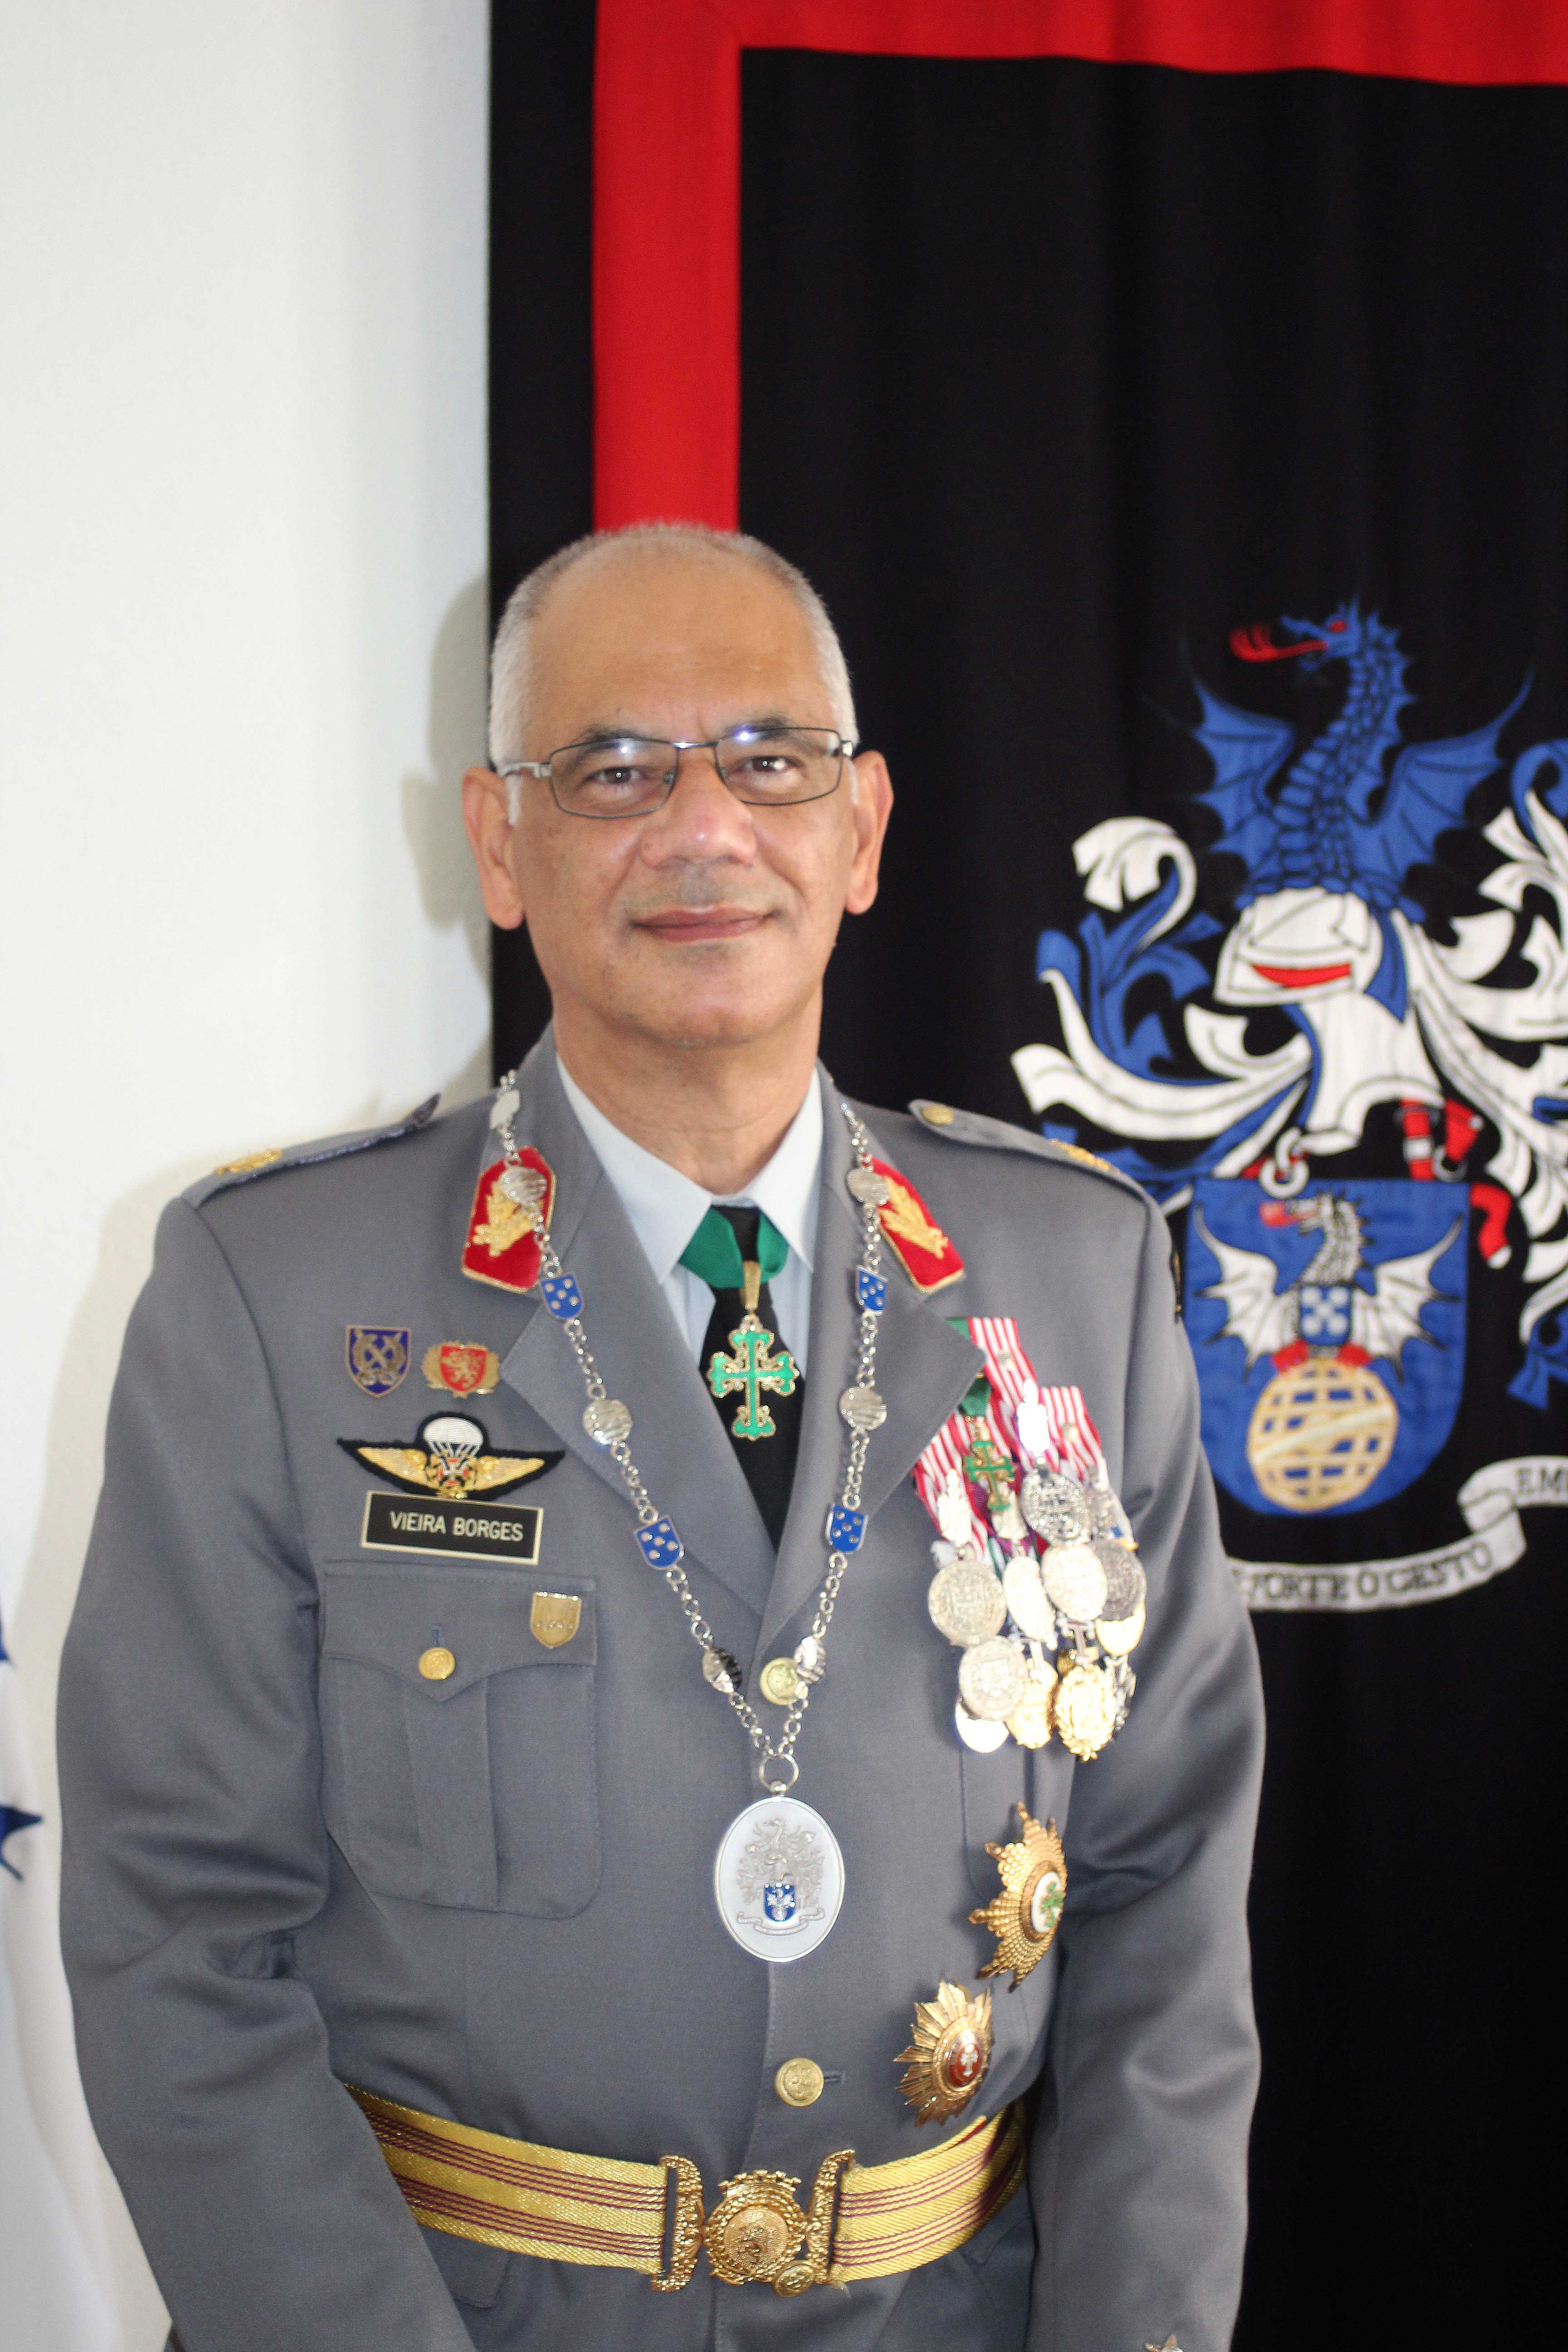 The President of the CPHM - Major General João Vieira Borges